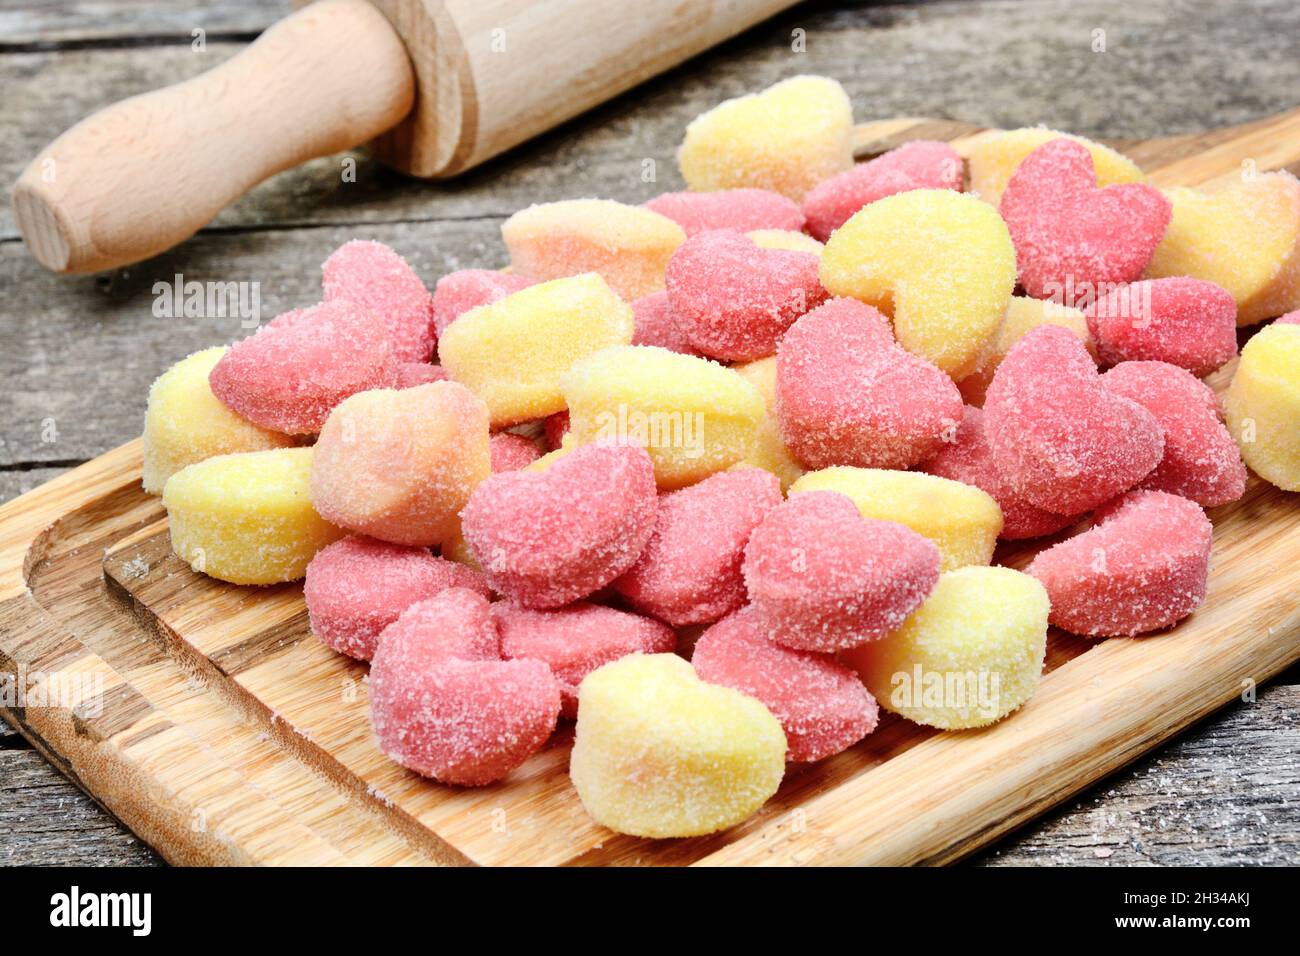 Raw uncooked potato gnocchi on a cutting board close-up Stock Photo